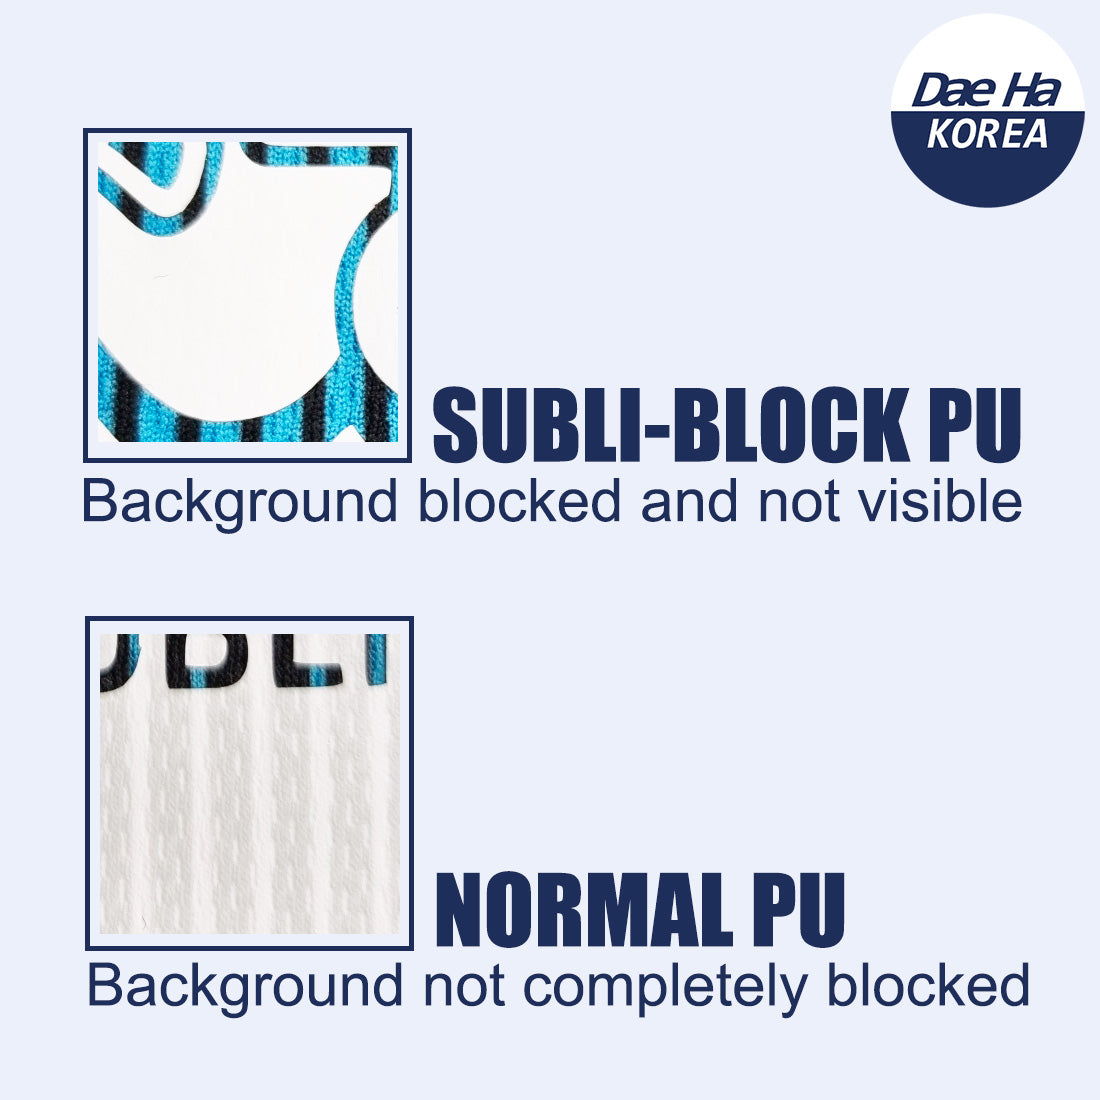 SUBLI-BLOCK PU